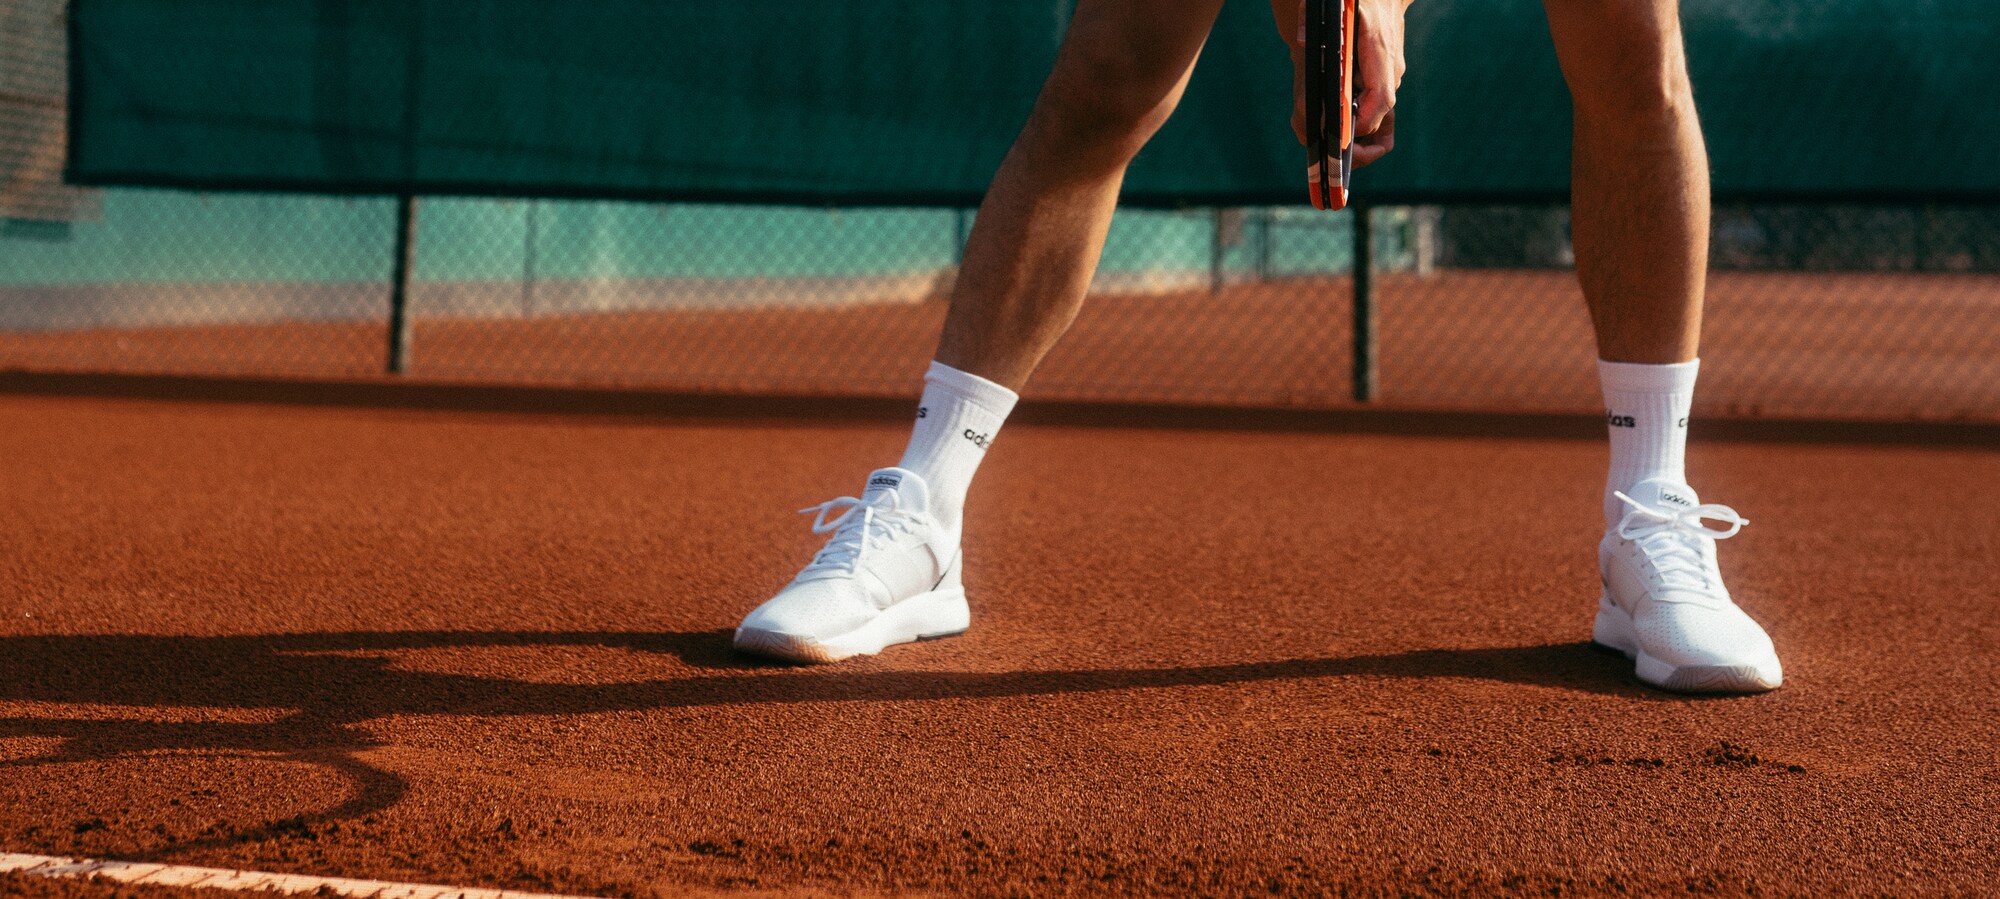 Game, set, match Sprievodca tenisovou obuvou